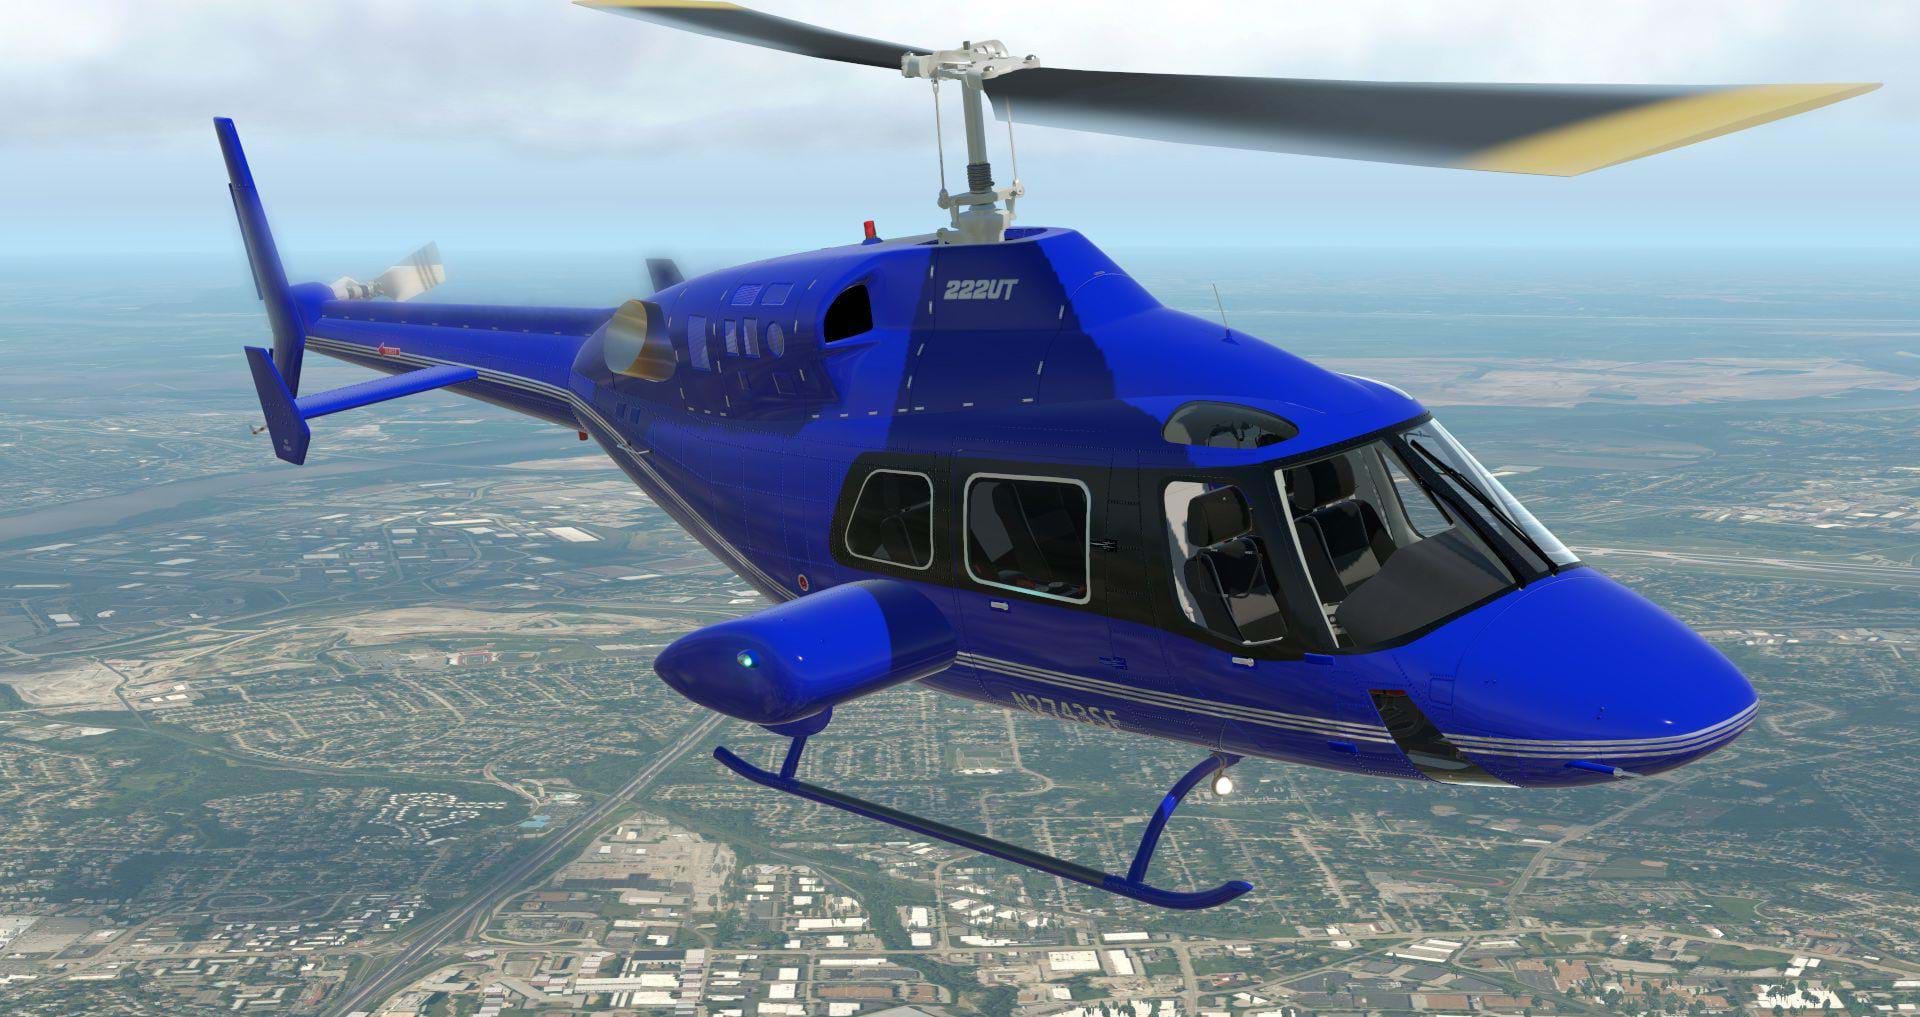 Cowan Simulation Bell 222UT for X-Plane